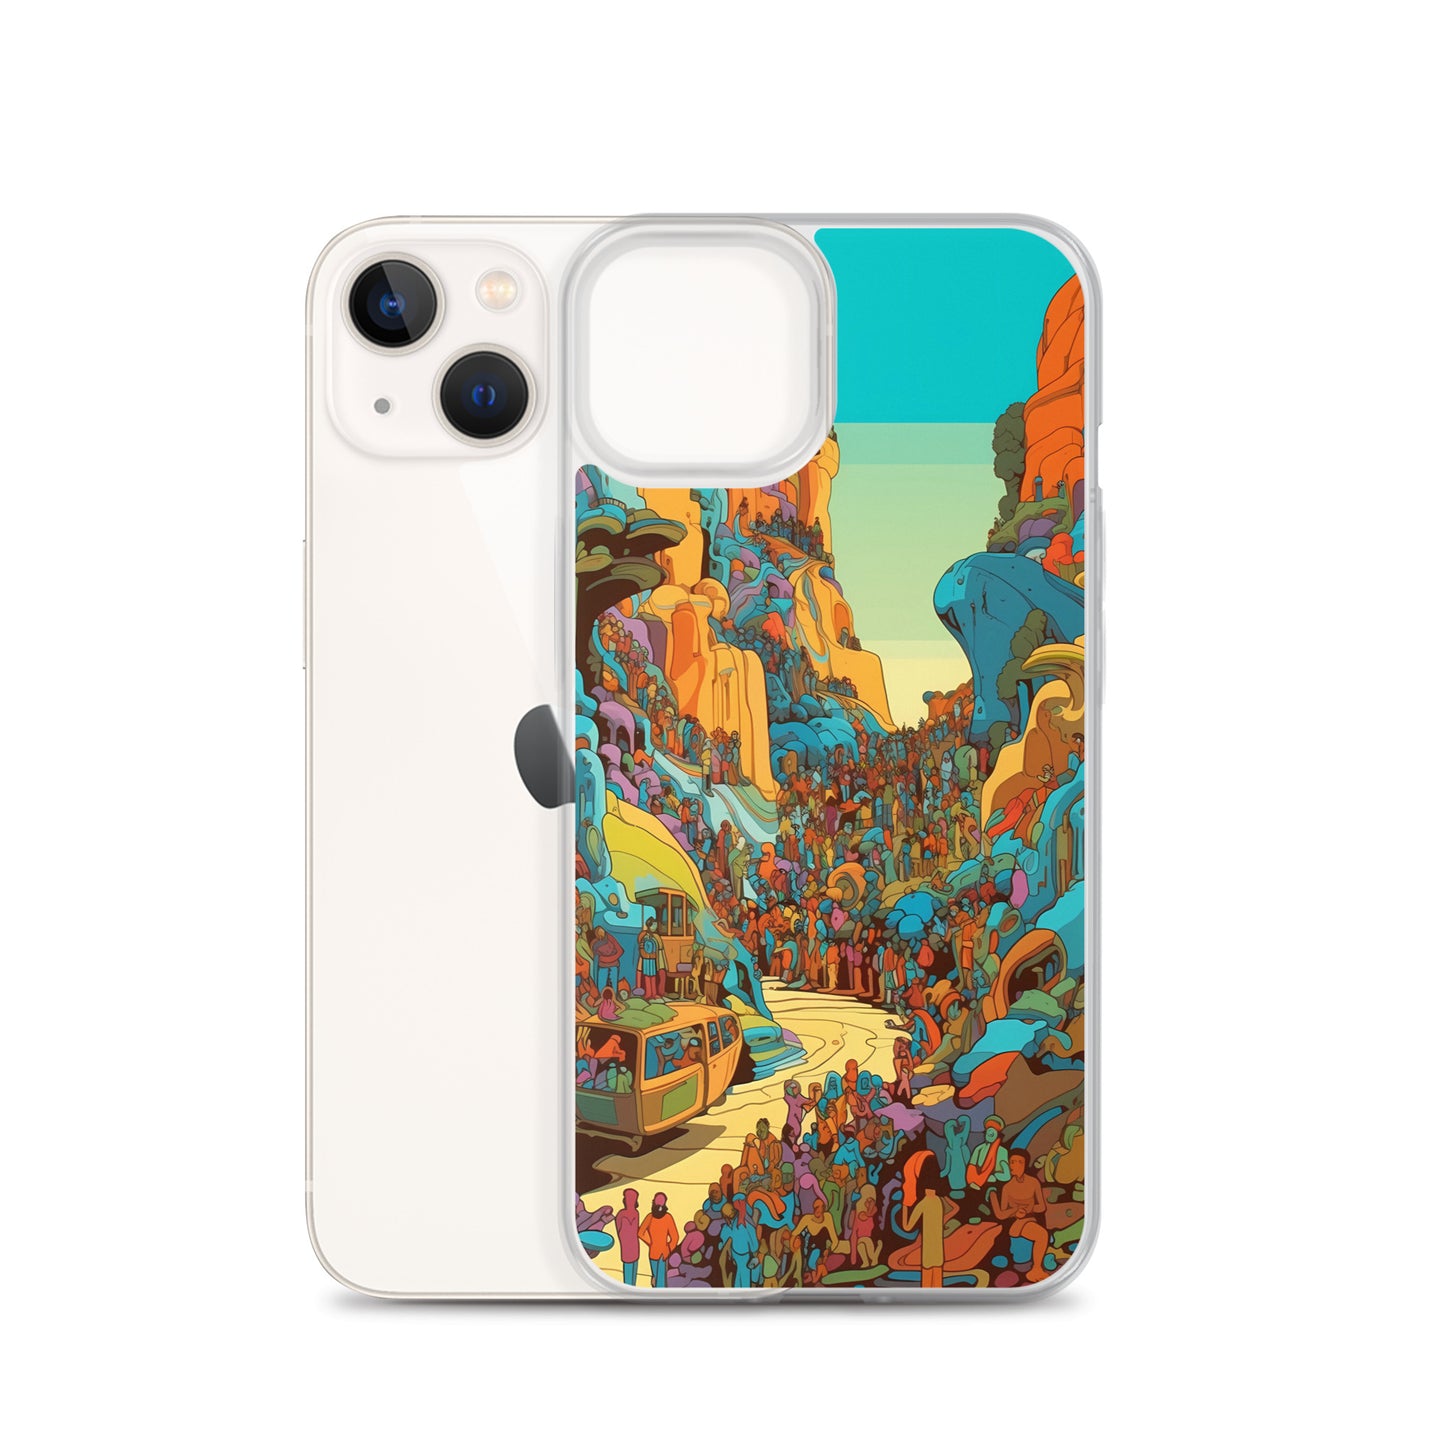 iPhone Case - Desert Dreamscape